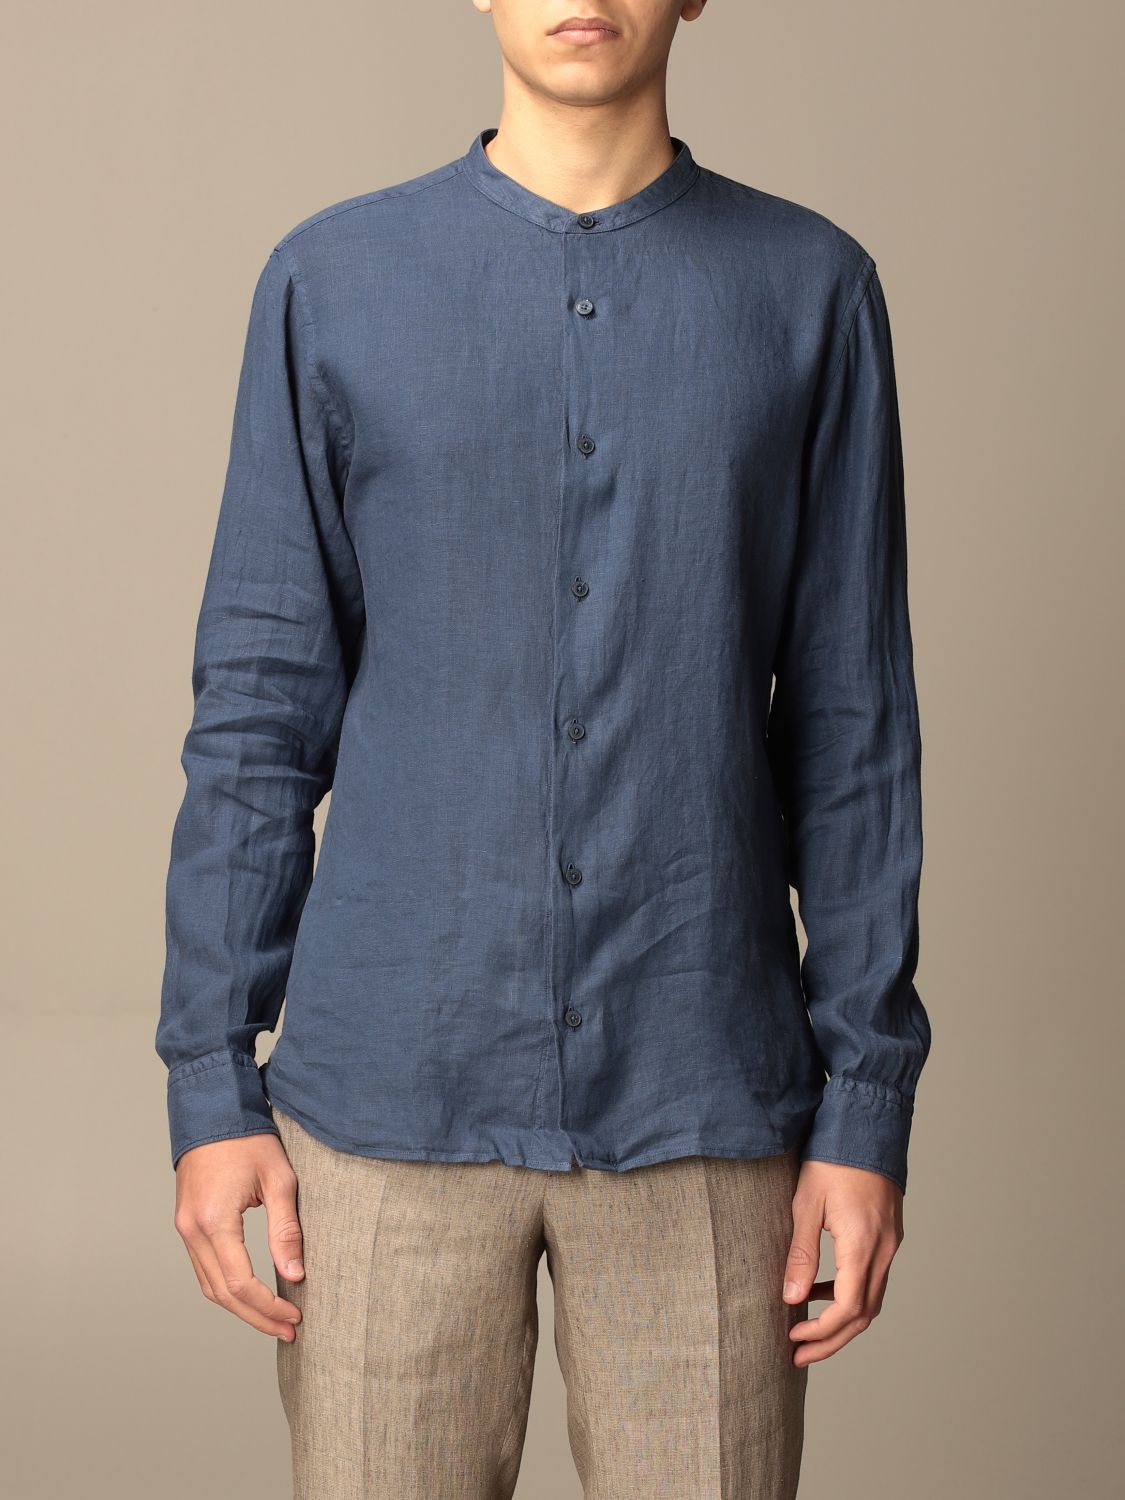 Shirt Z Zegna: Z Zegna shirt in washed linen with mandarin collar navy 1